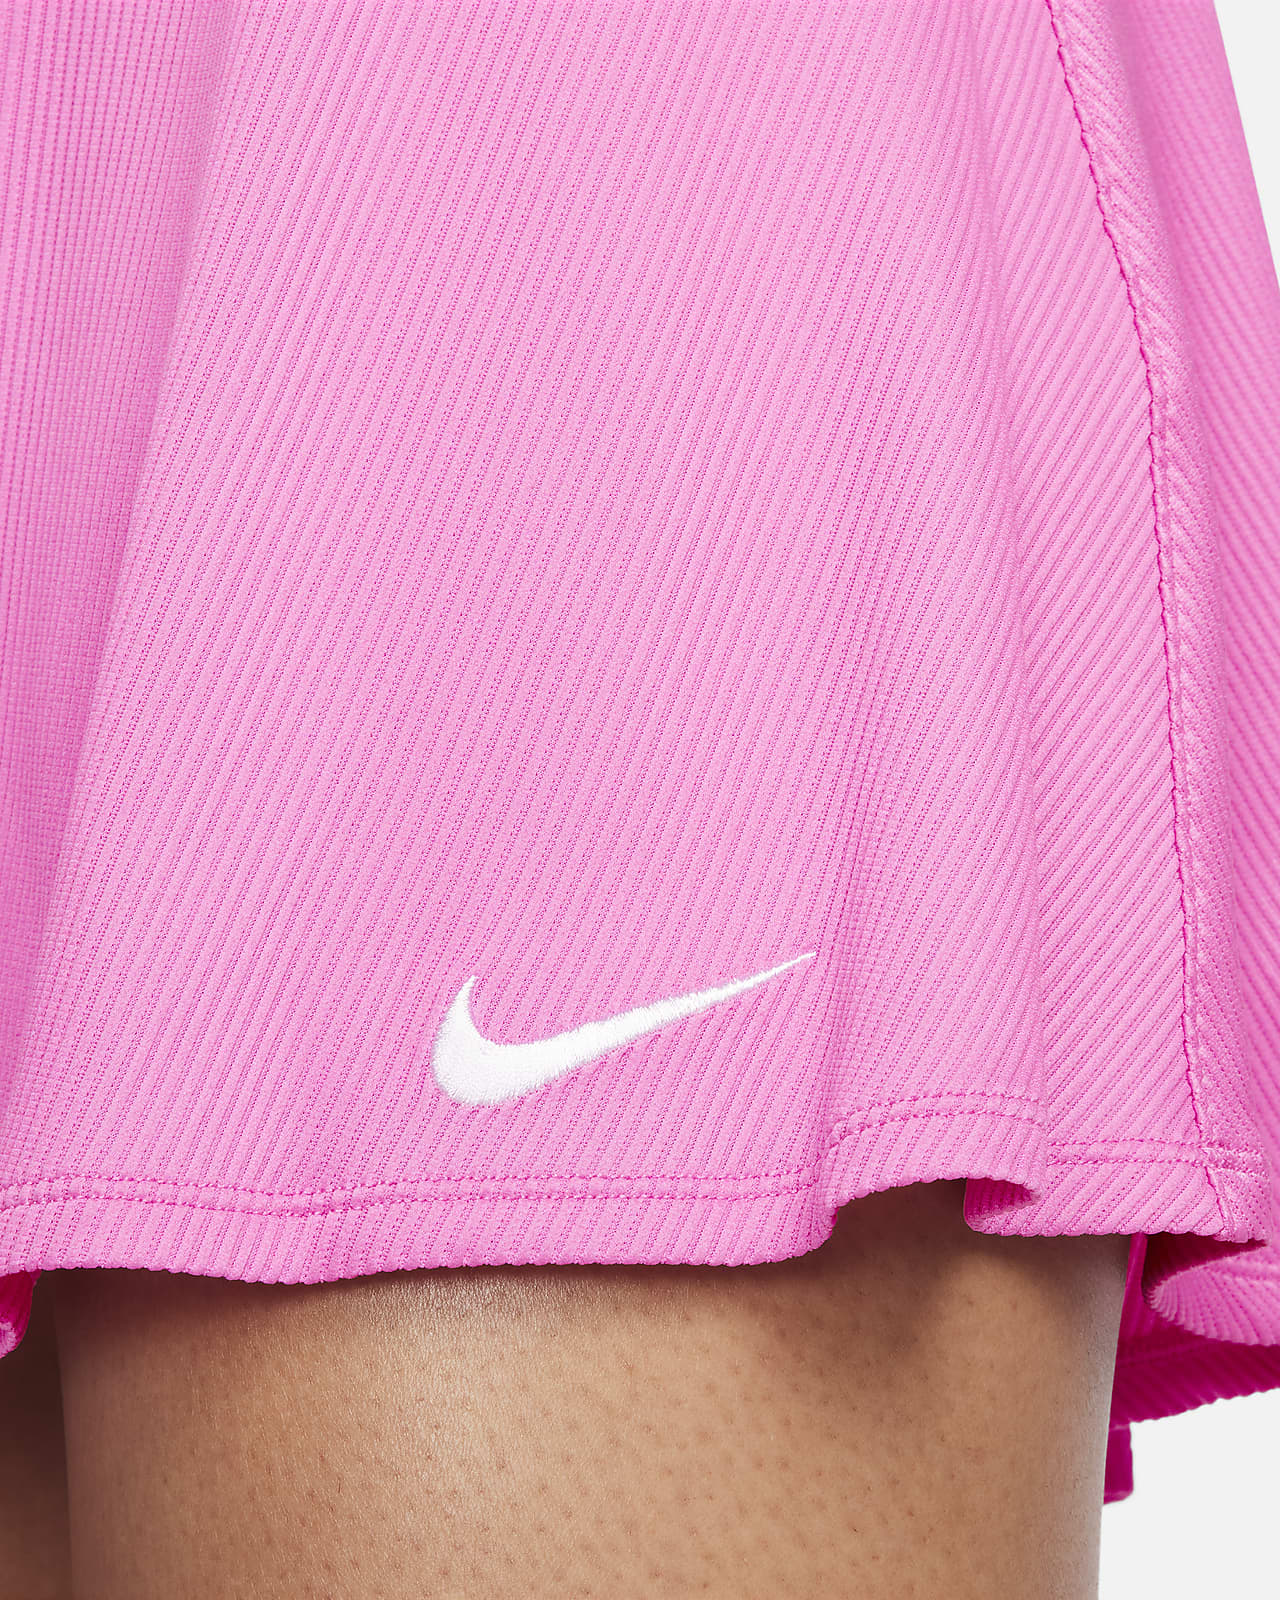 Nike Dri-FIT Advantage Women's Short Tennis Skirt